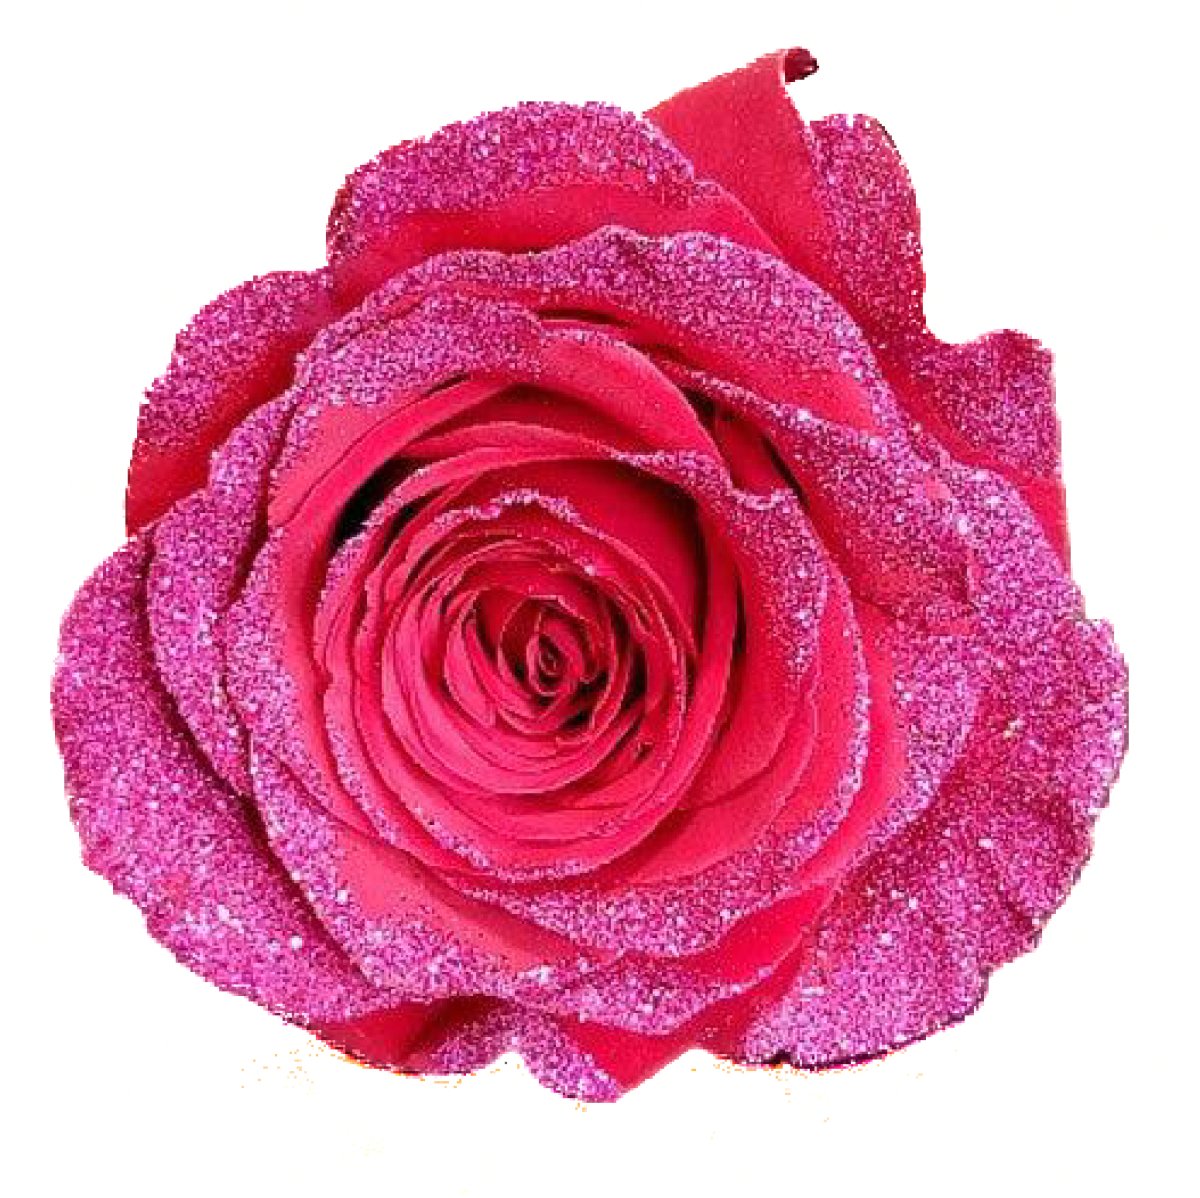 25 Fresh Red Rose Glitter Bouquet